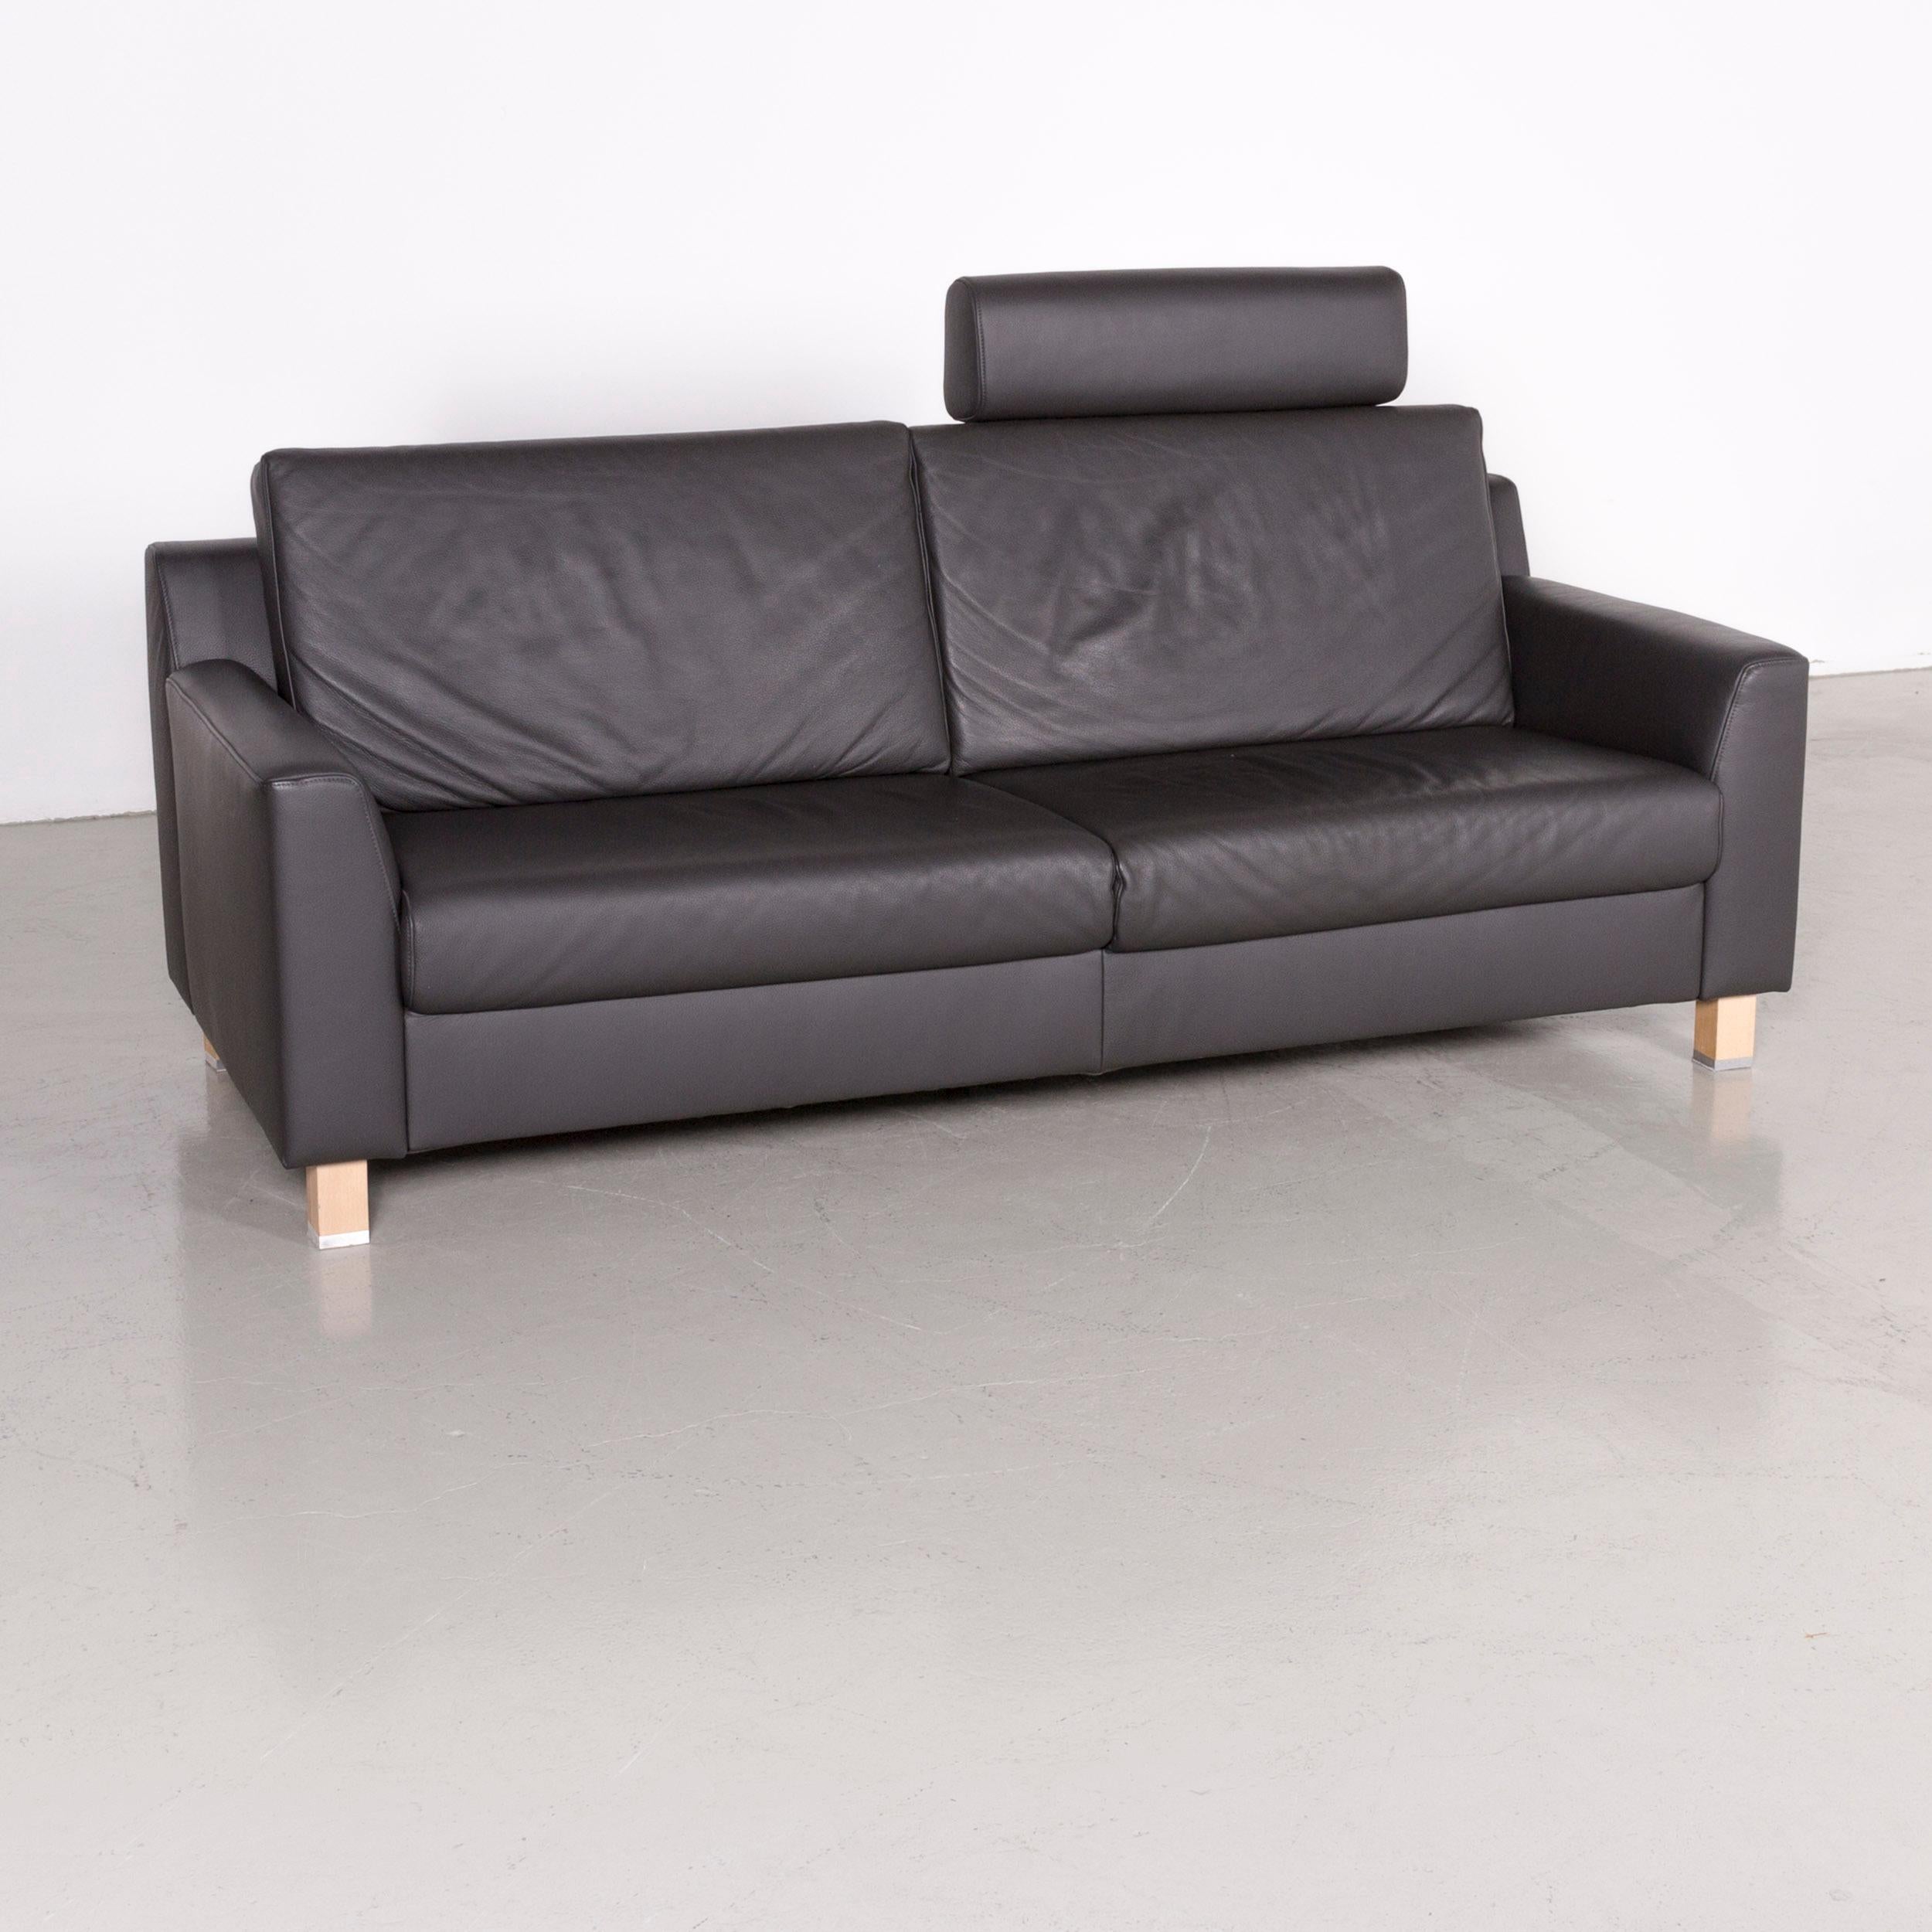 Ewald Schillig flex plus designer leather sofa grey three-seat couch.